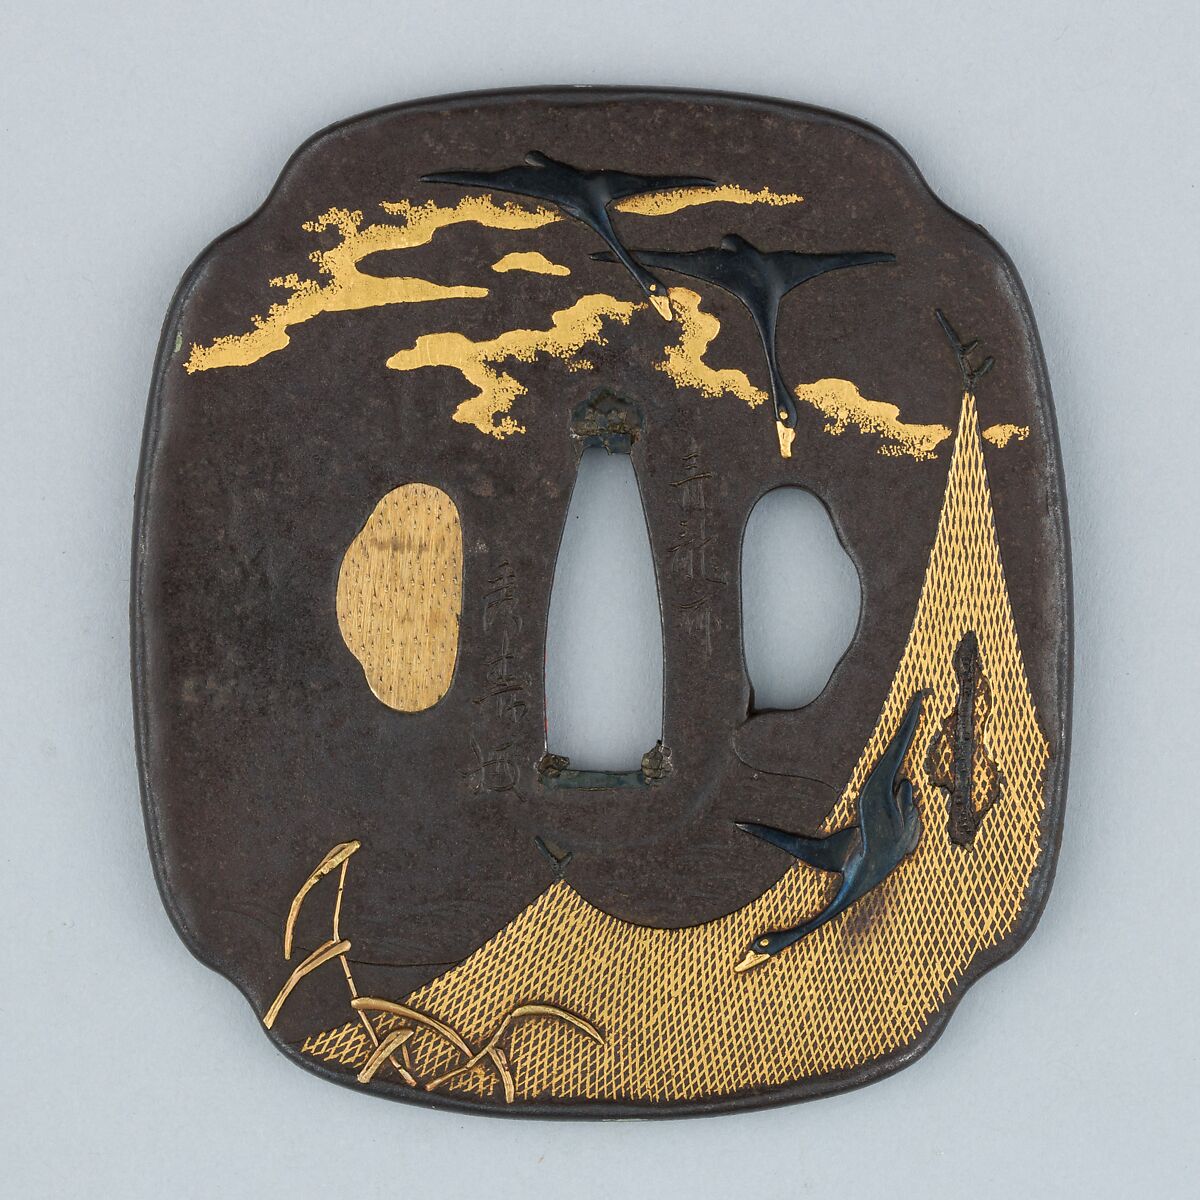 Sword Guard (Tsuba), Iron, gold, silver, copper-gold alloy (shakudō), copper, Japanese 